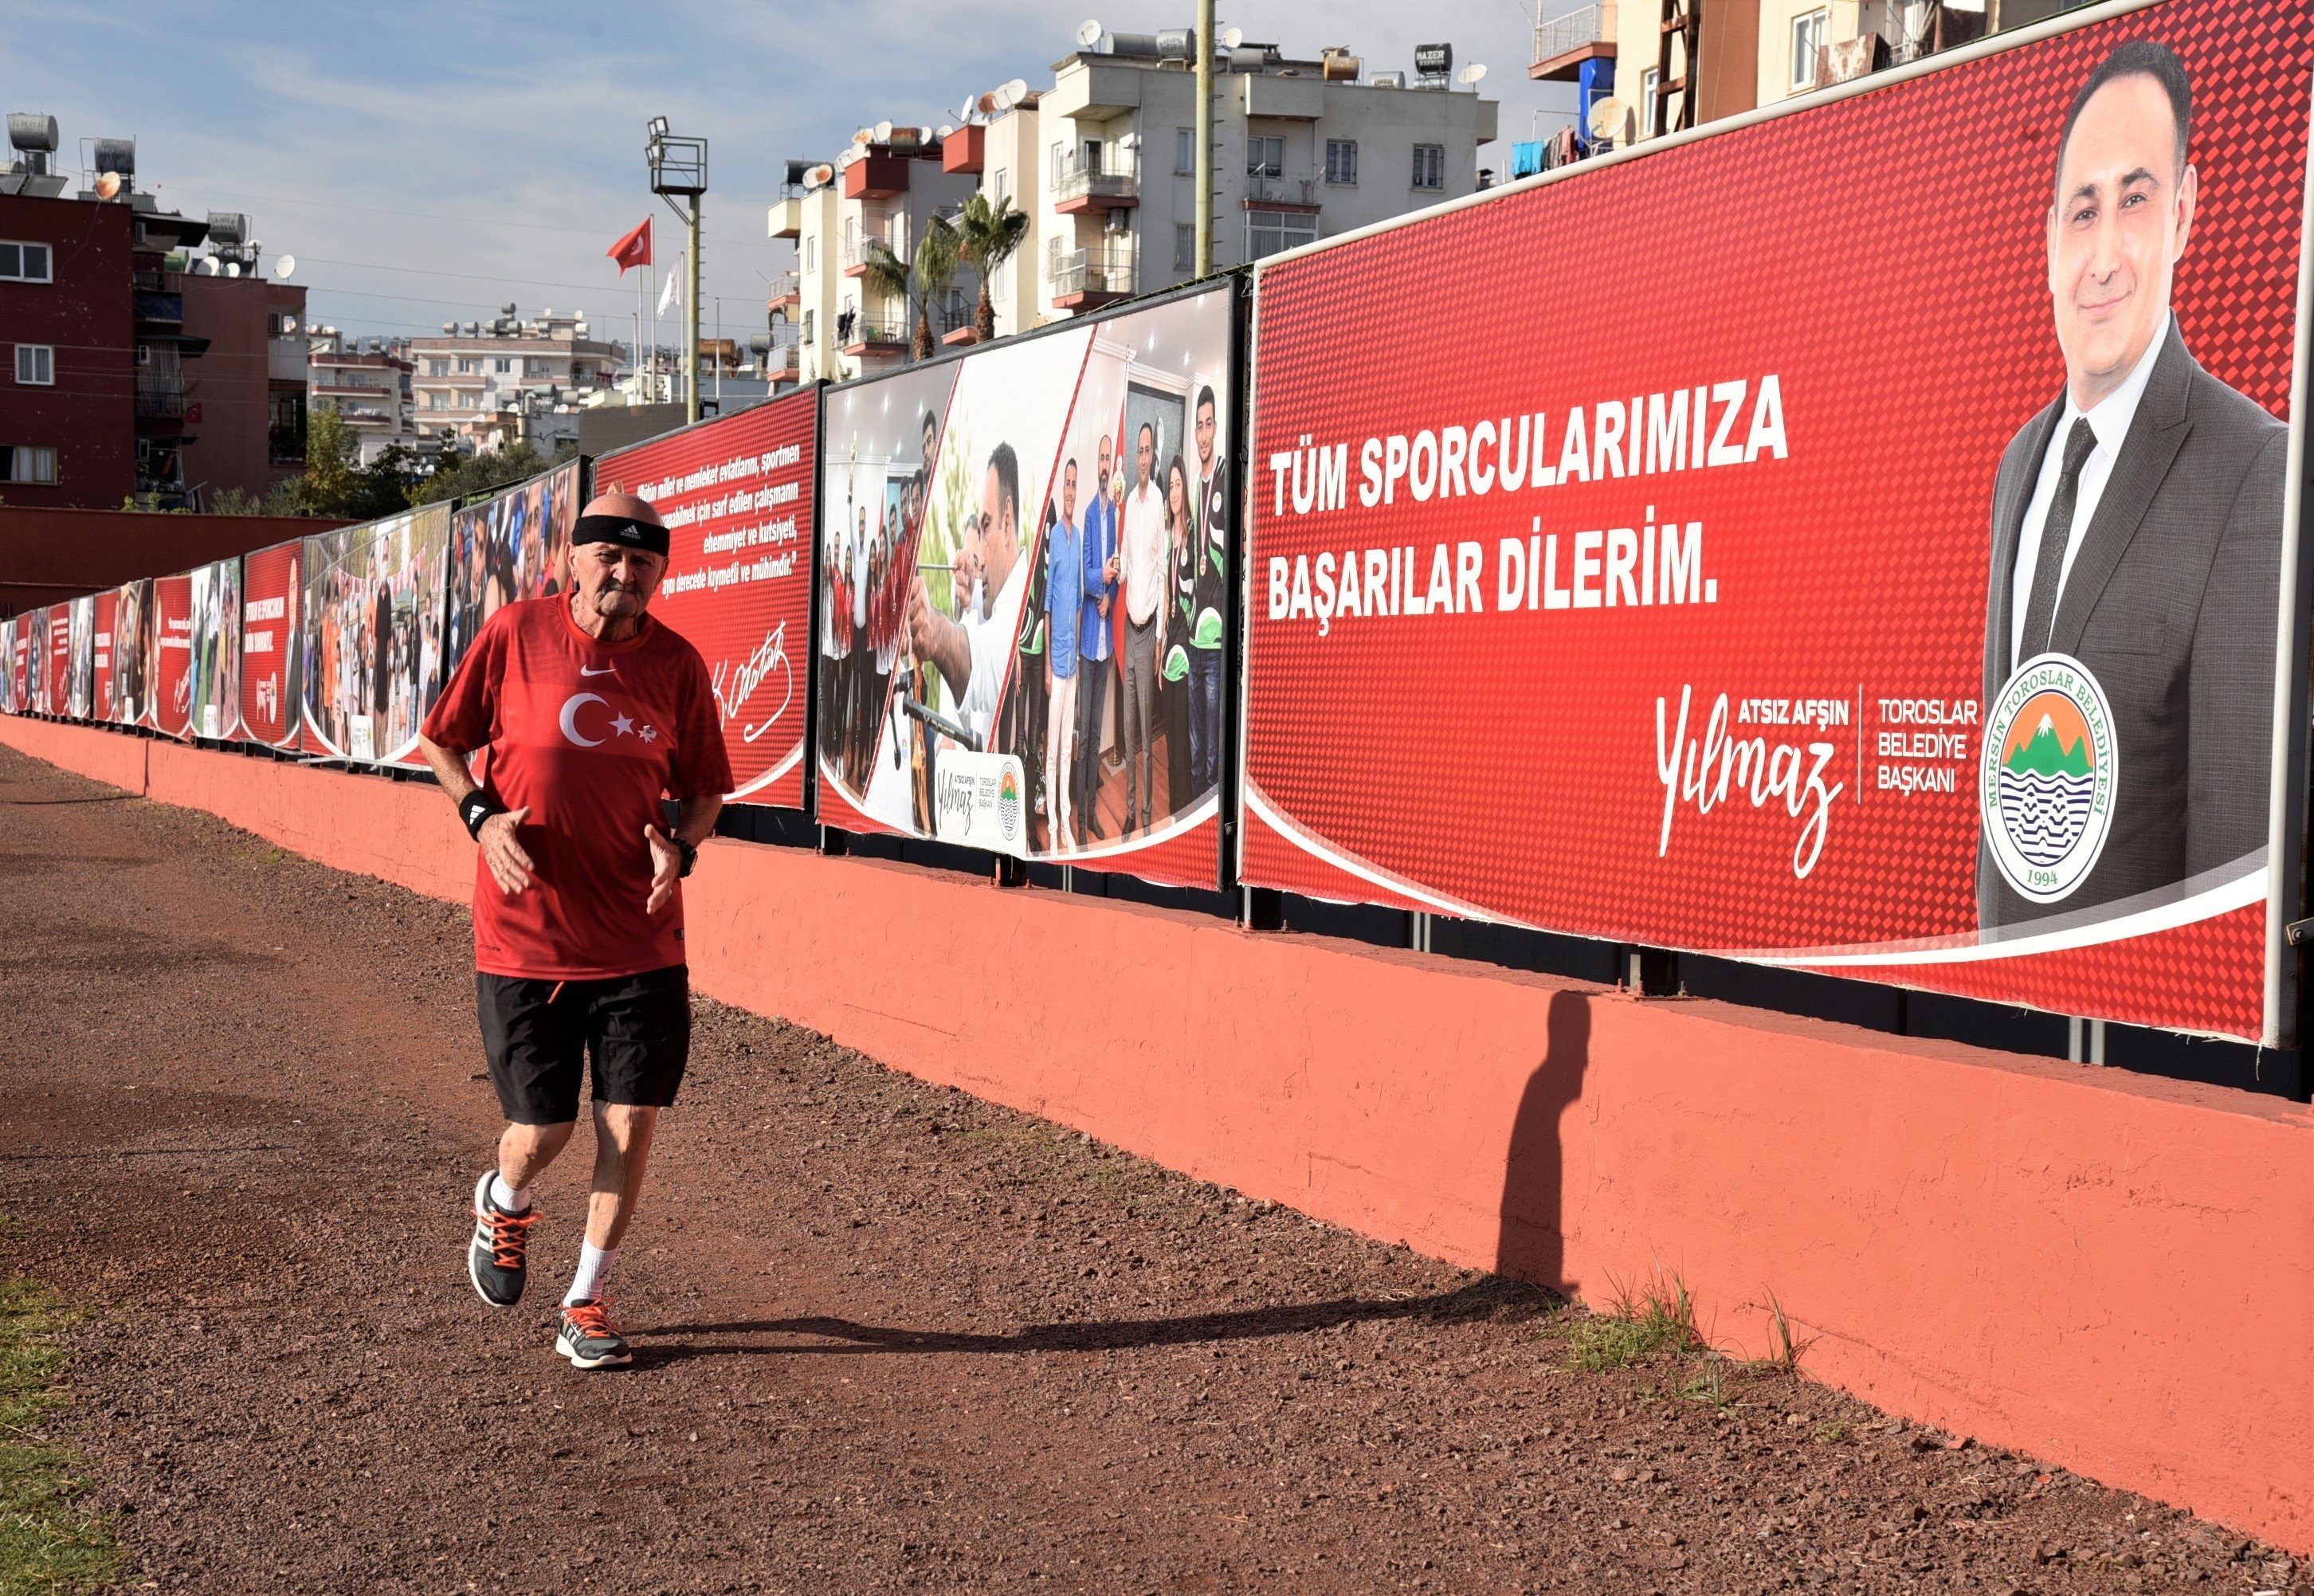 Pelari maraton Turki Ahmet Kahveci, 74, terlihat berlatih di depan poster Walikota Toroslar Atsız Afşın Yılmaz di tenggara provinsi Mersin, Turki, 10 November.  16, 2021. (Foto IHA)